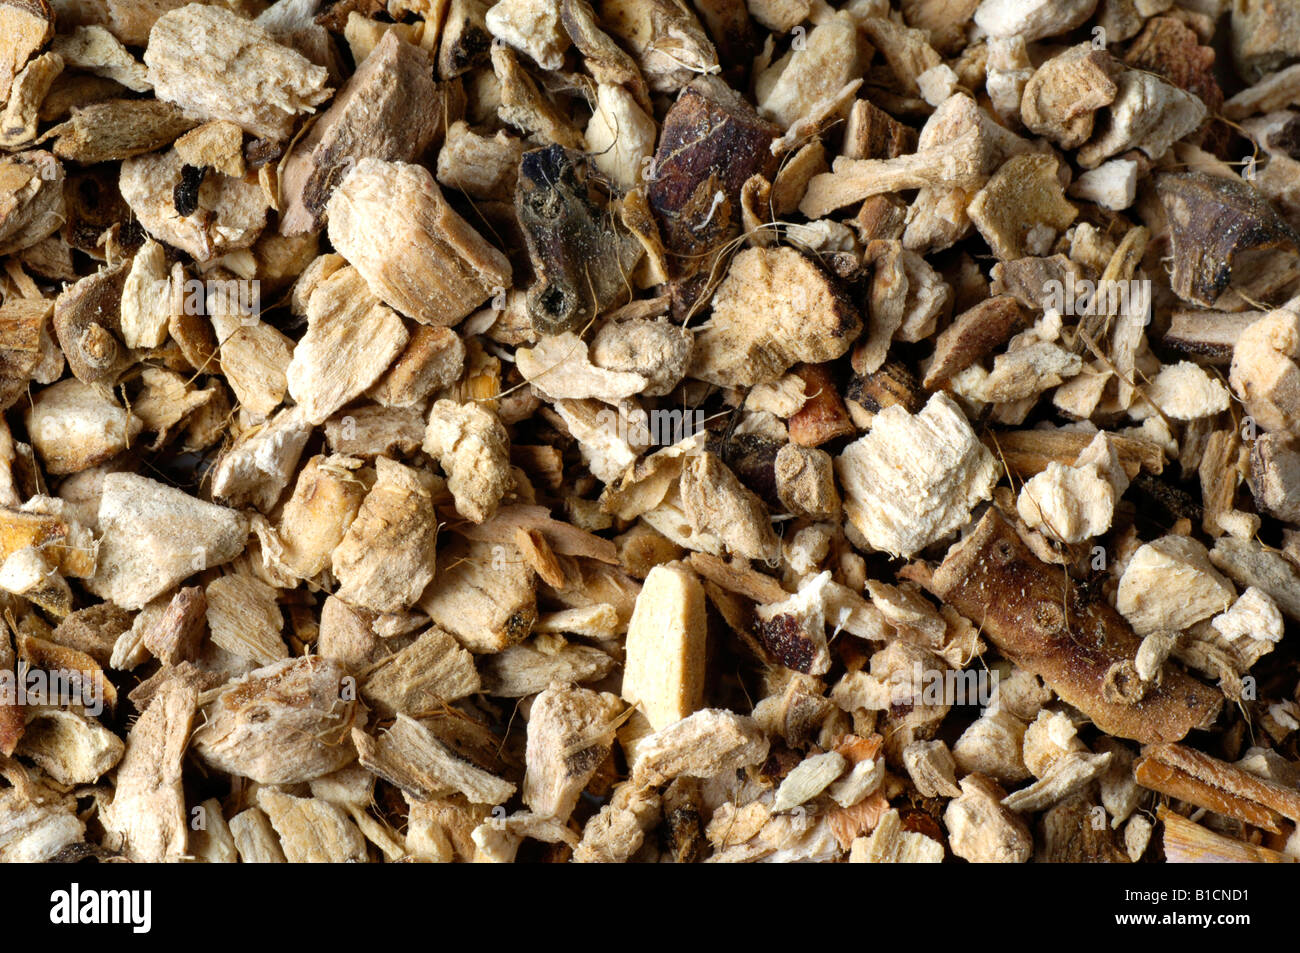 sweetflag, sweet sedge (Acorus calamus), dried rhizoms Stock Photo